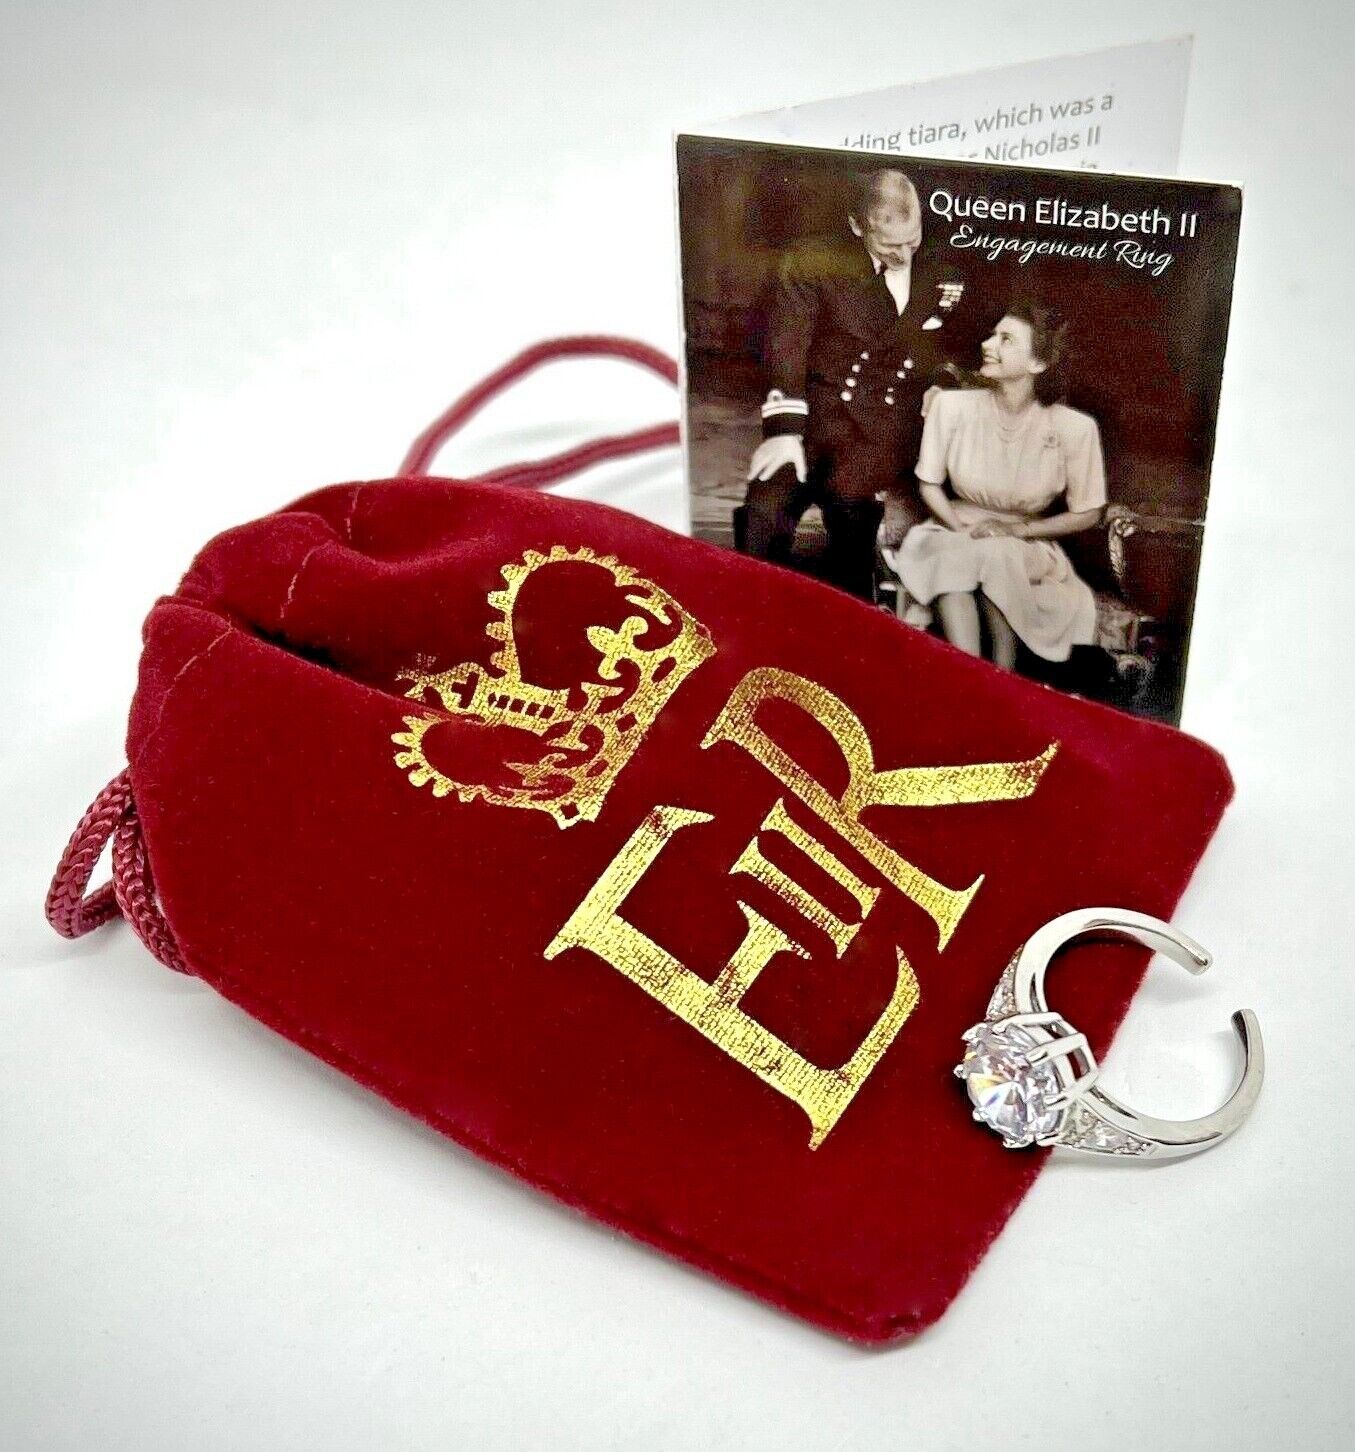 Queen Elizabeth II Engagement Ring Replica - Platinum Jubilee Royal Memorabilia